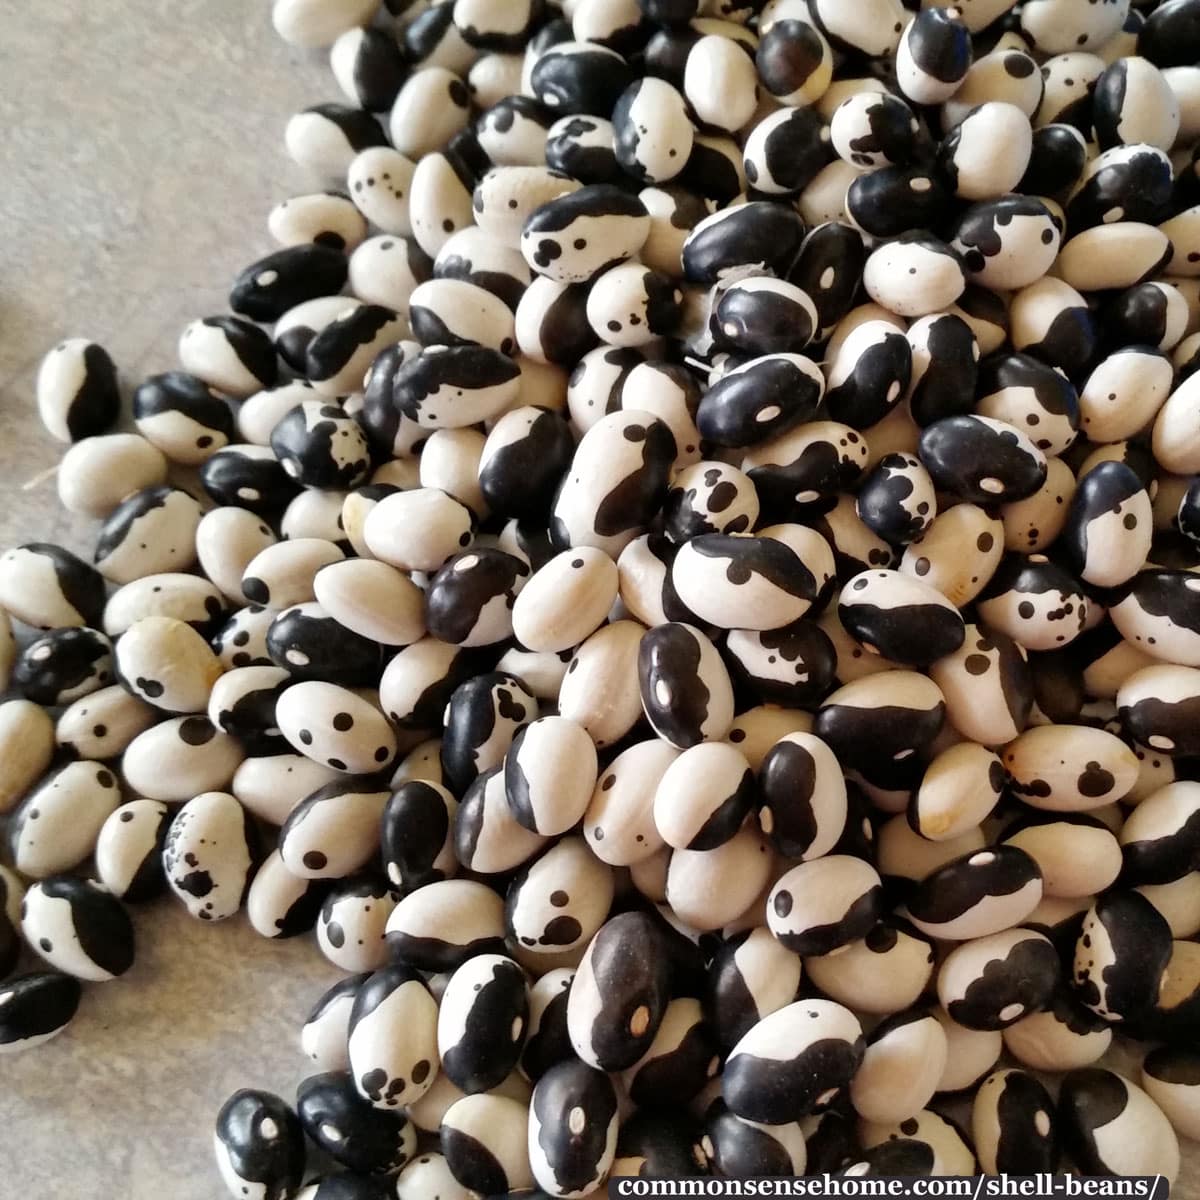 Calypso dried shell beans